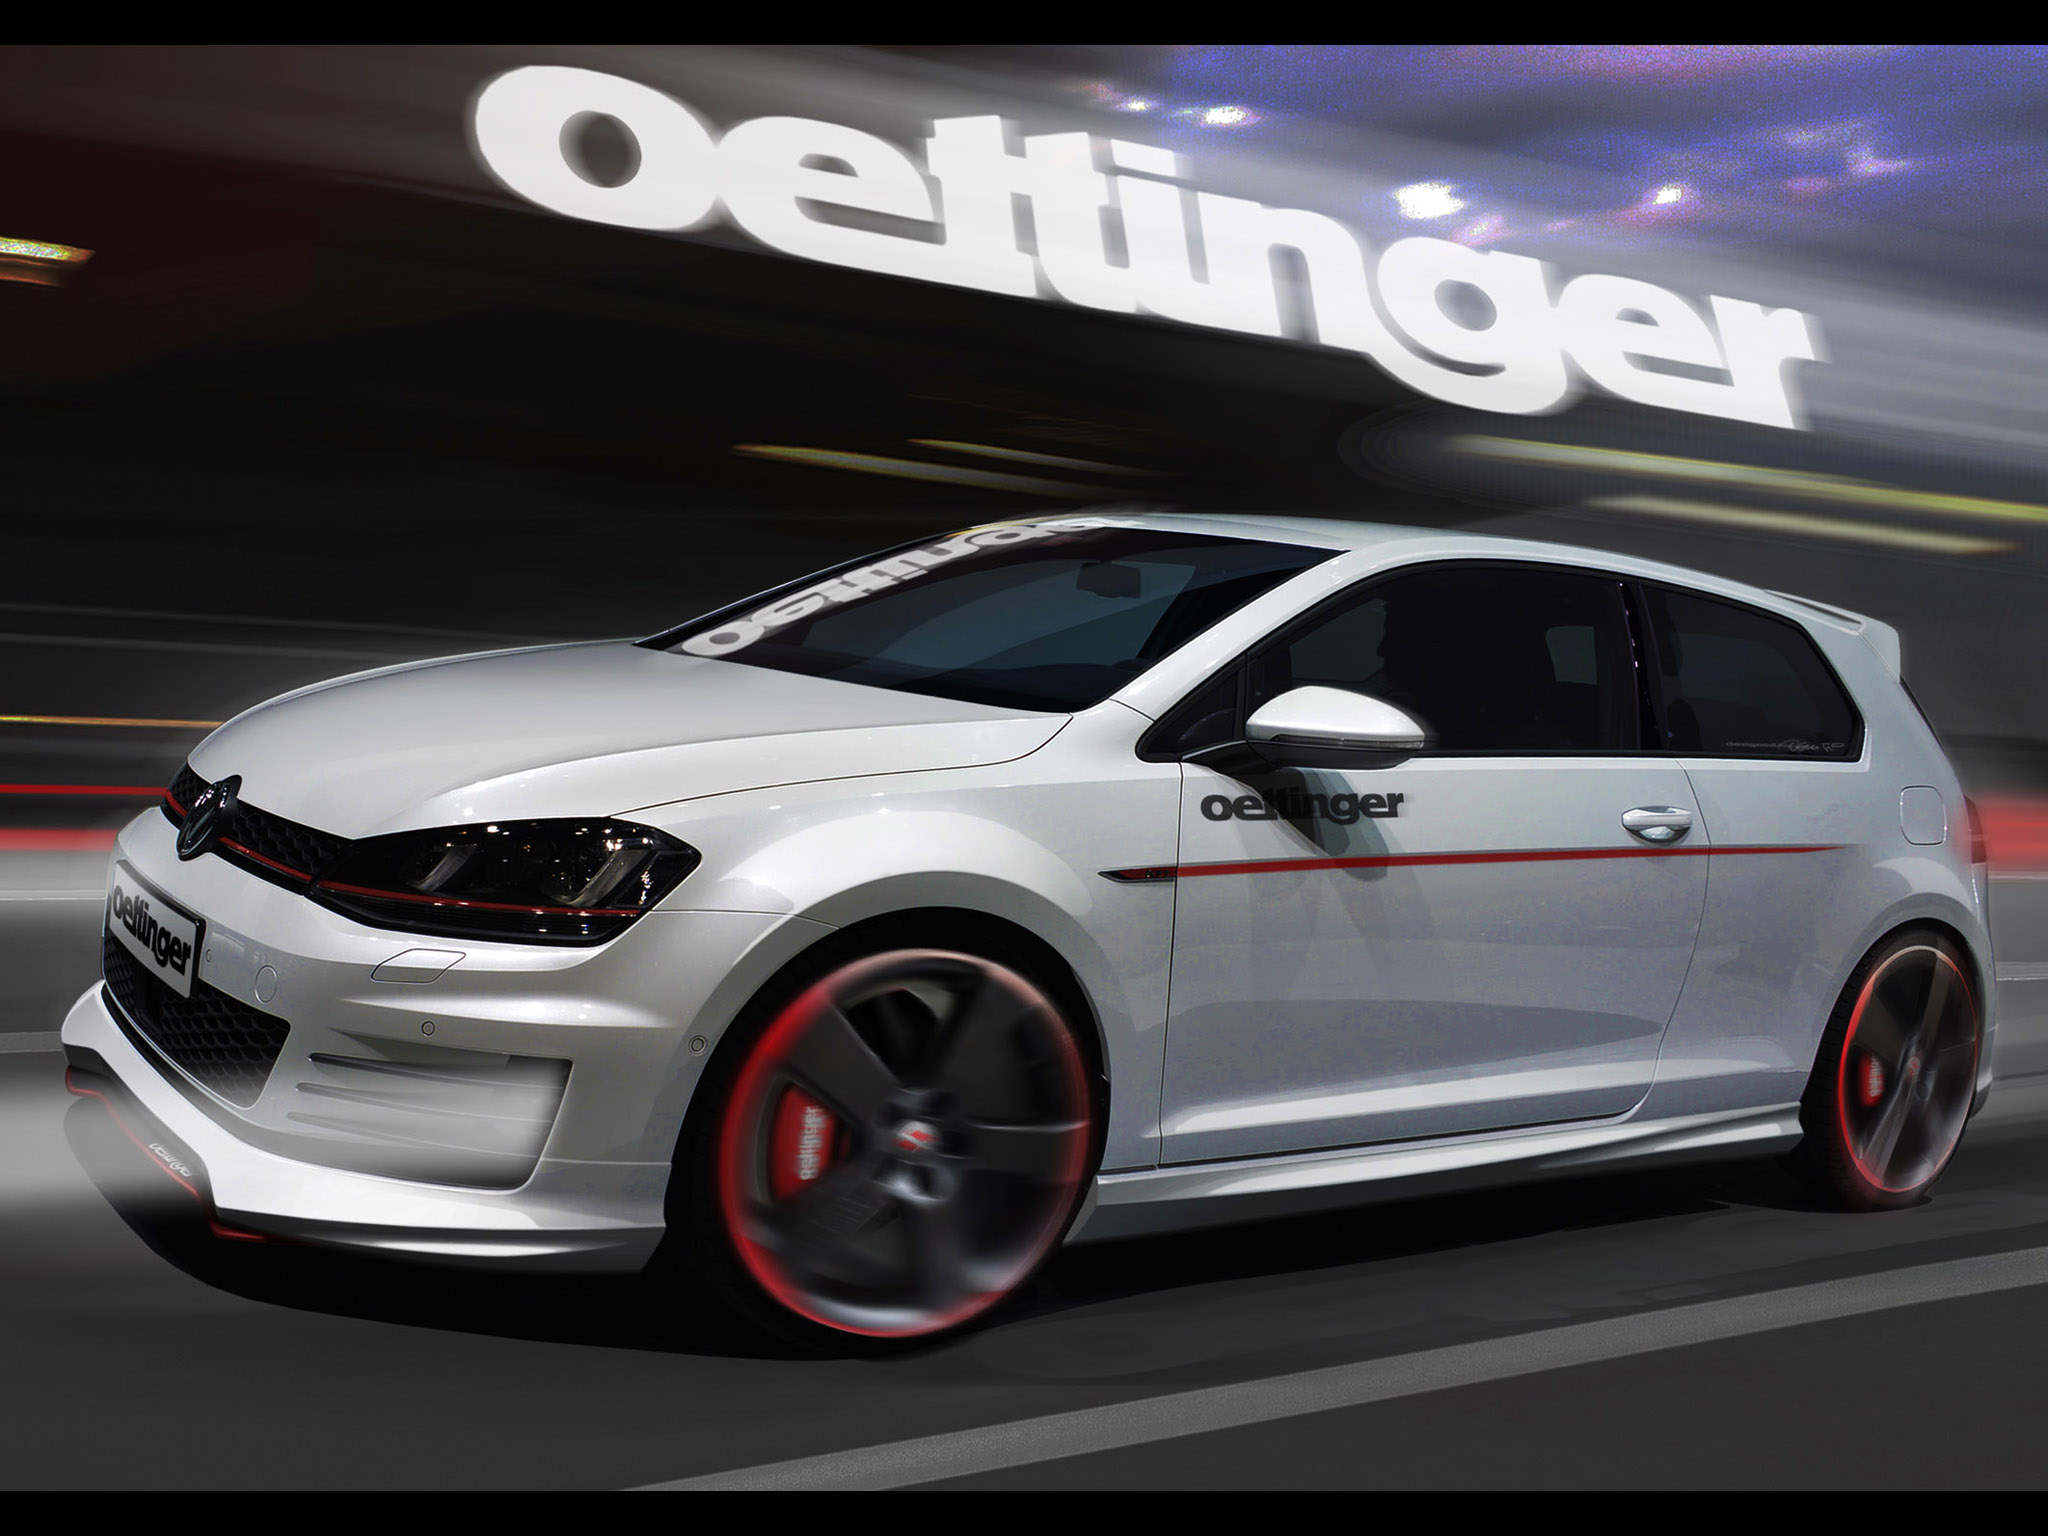  Oettinger Volkswagen Golf GTI tuning wallpaper 2048x1536